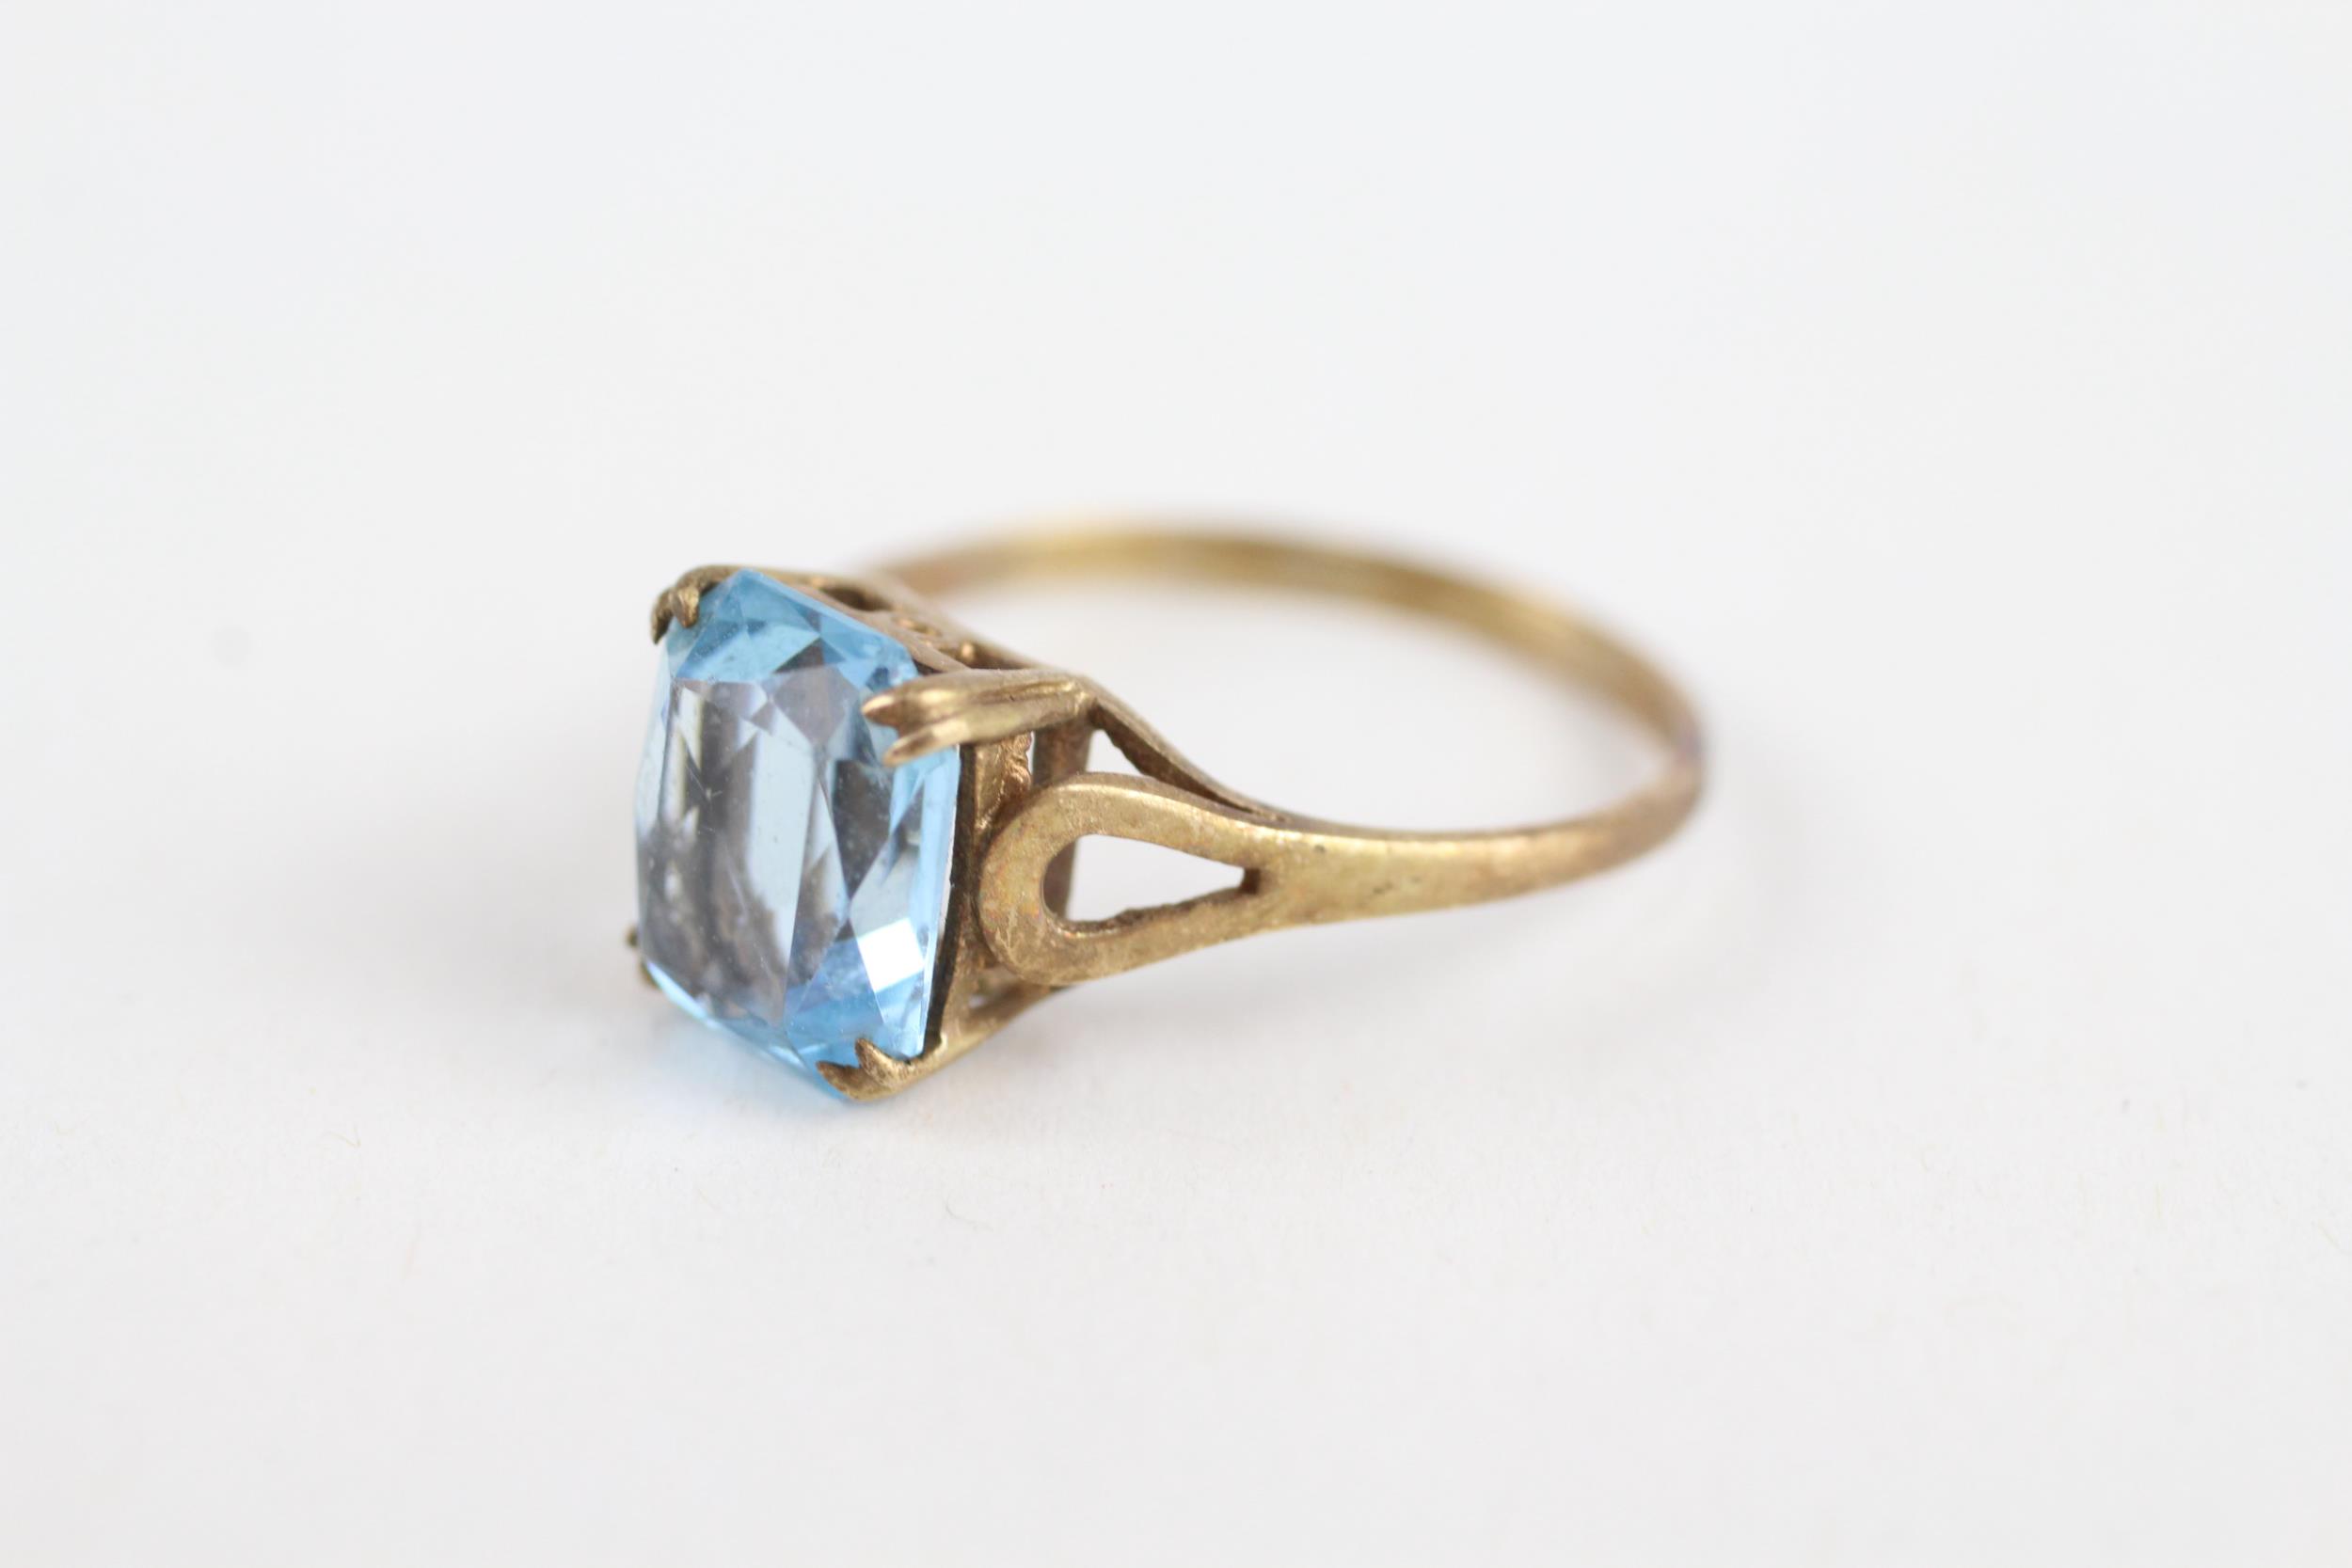 9ct gold vintage blue paste dress ring Size P - 2.2 g - Image 3 of 4